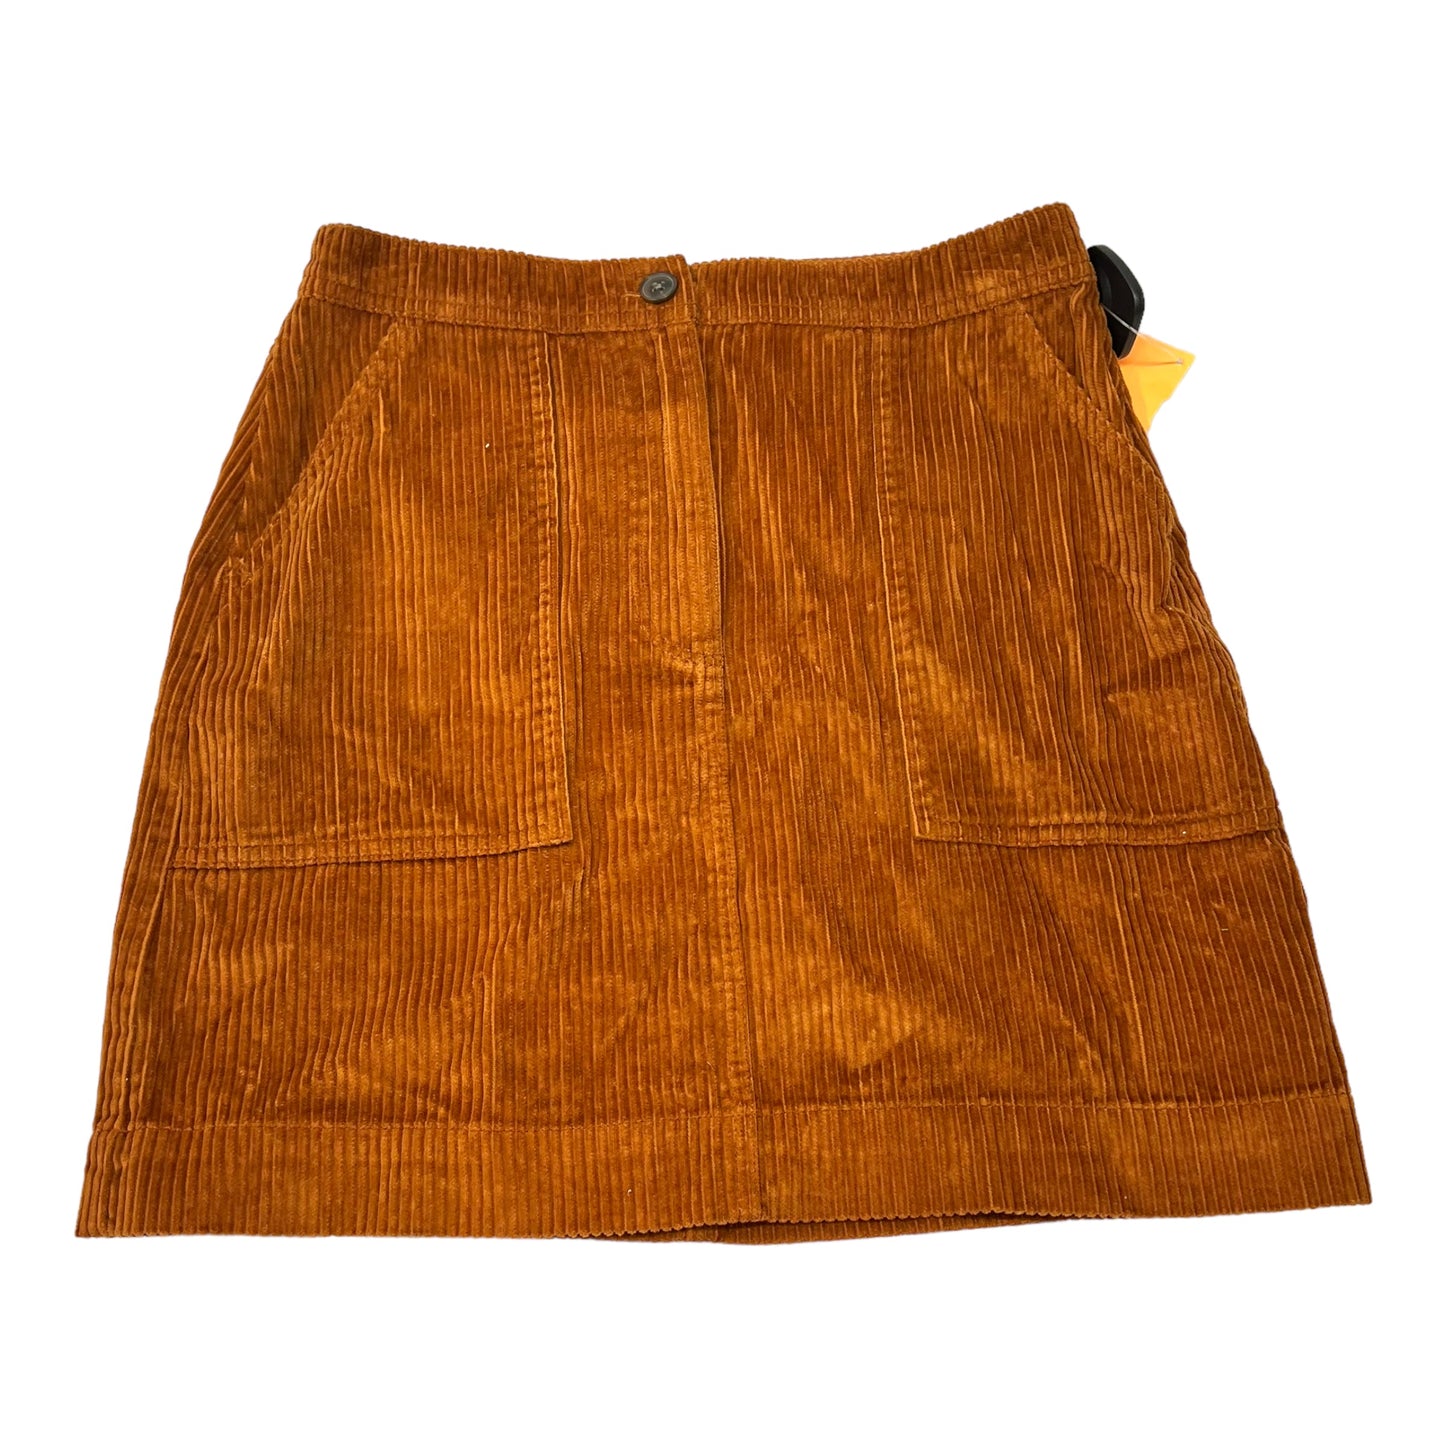 Skirt Mini & Short By Gap  Size: Xs